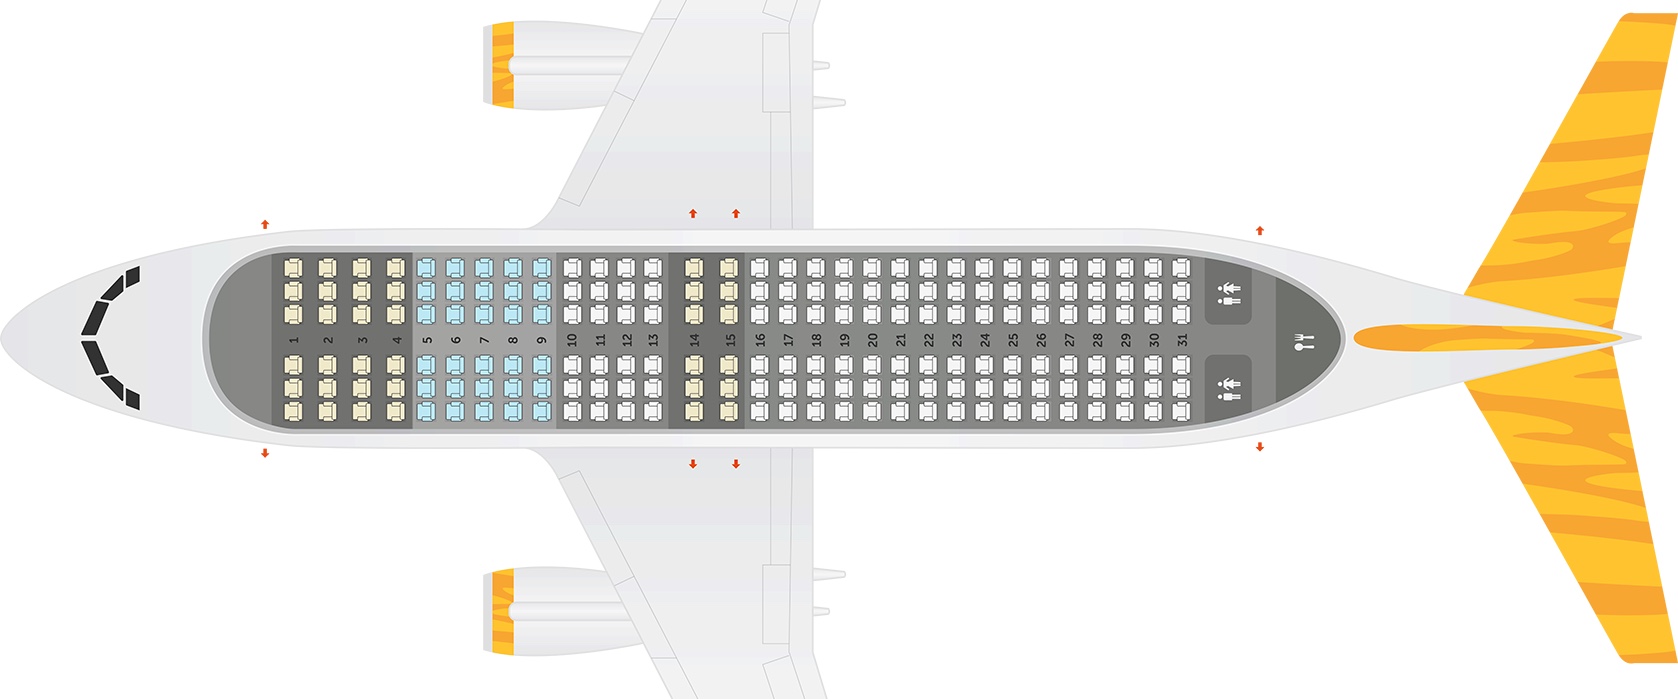 Tigerair Australia 737-800 Economy overview seat map | Point Hacks